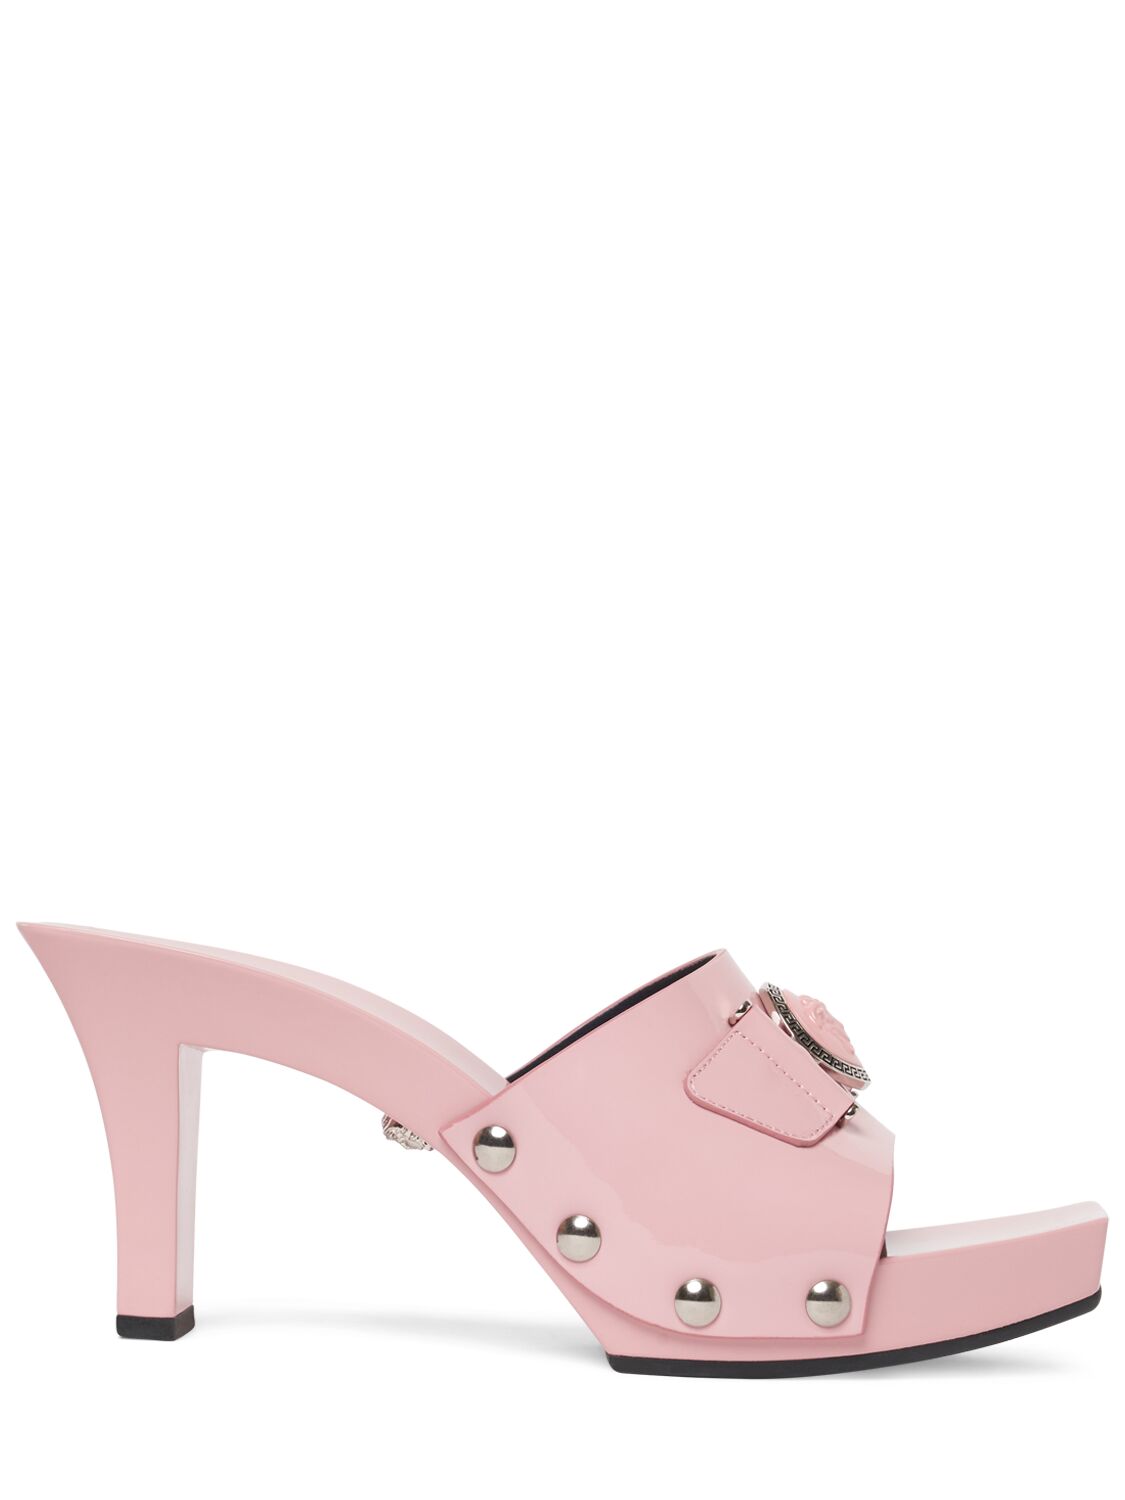 Versace 60毫米漆皮木屐鞋 In Light Pink